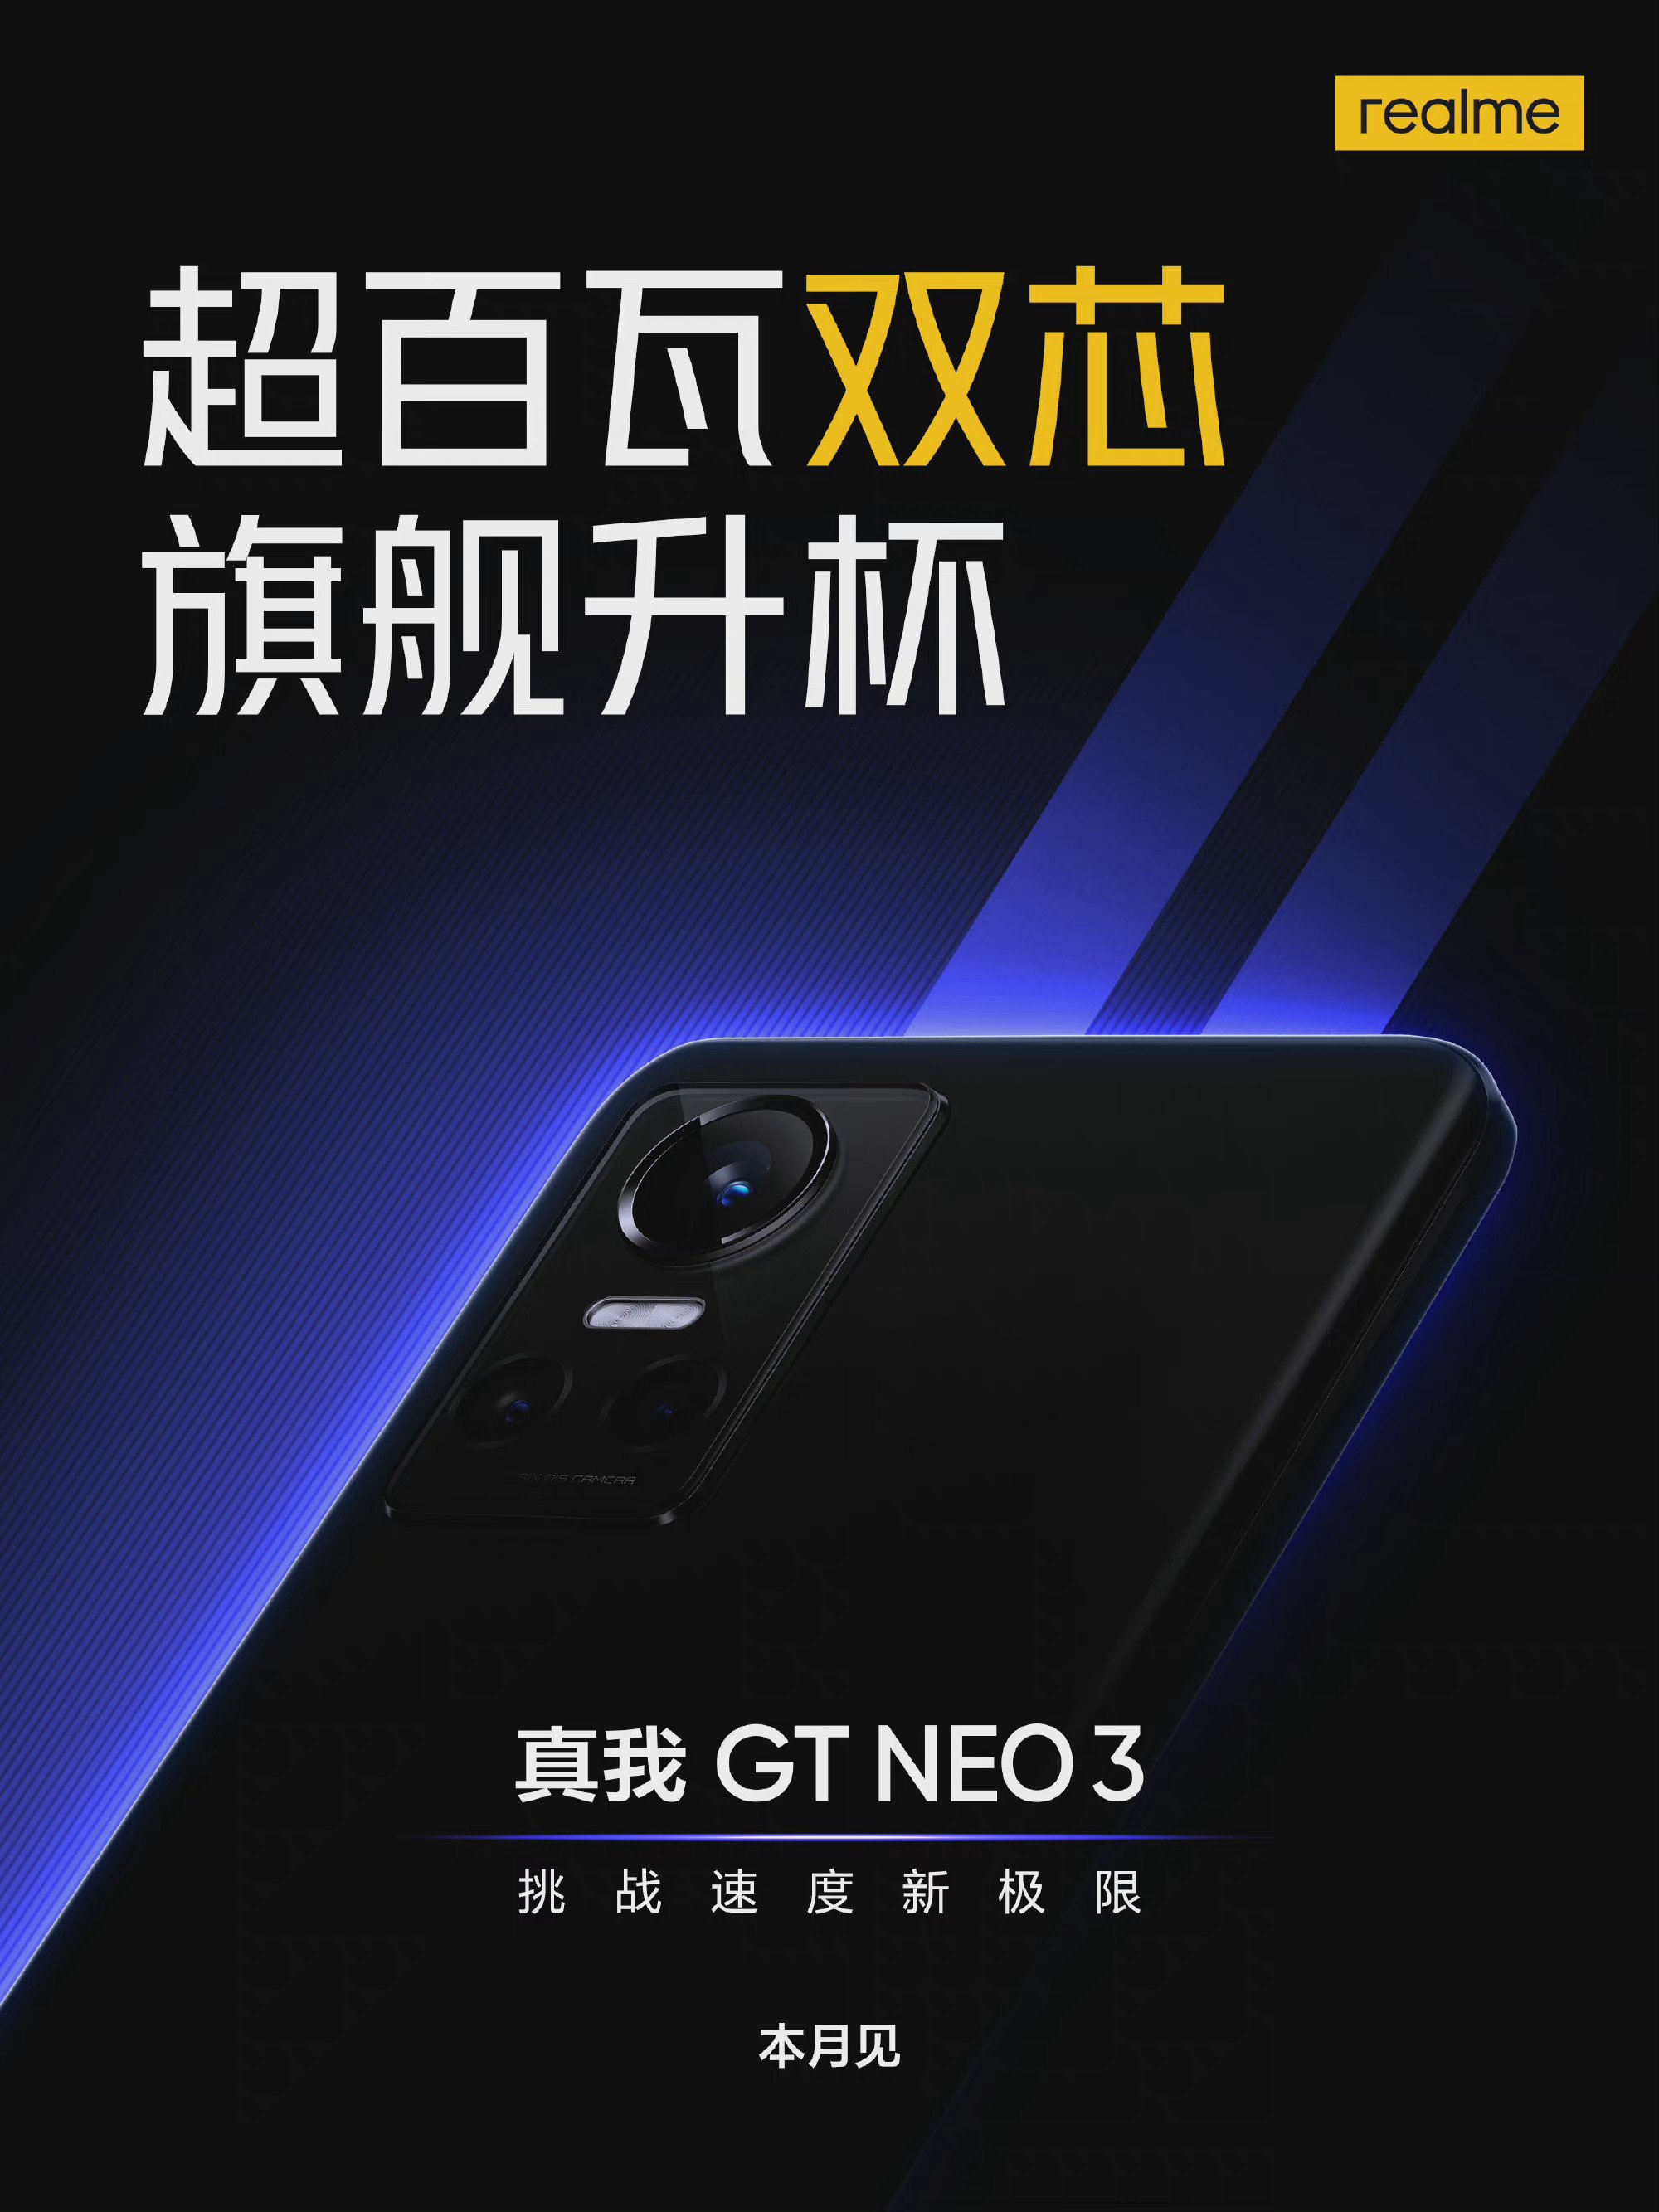 Realme GT neo3 poster